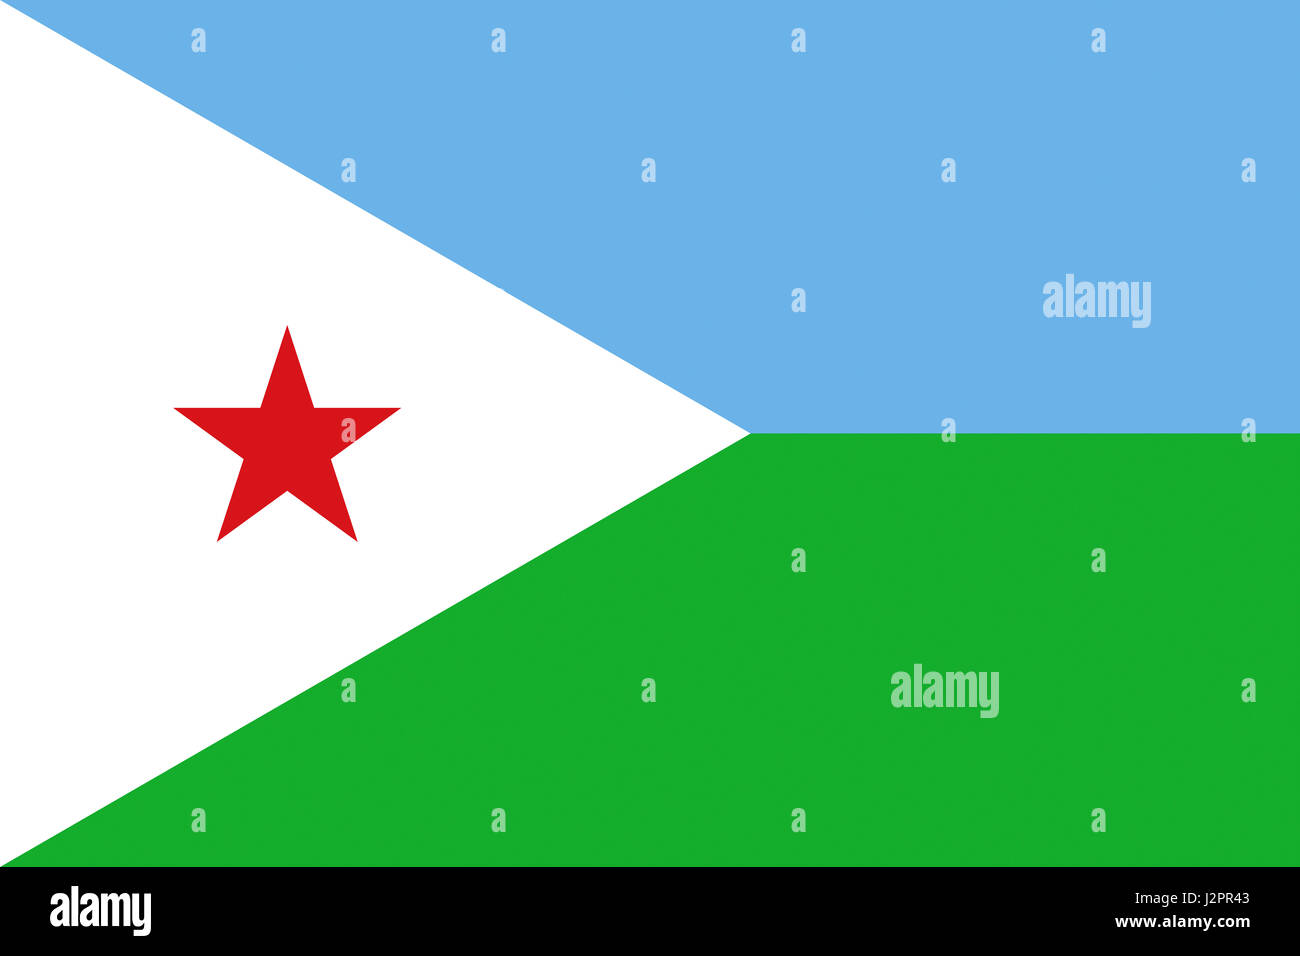 Illustration of the national flag of Djibouti Stock Photo